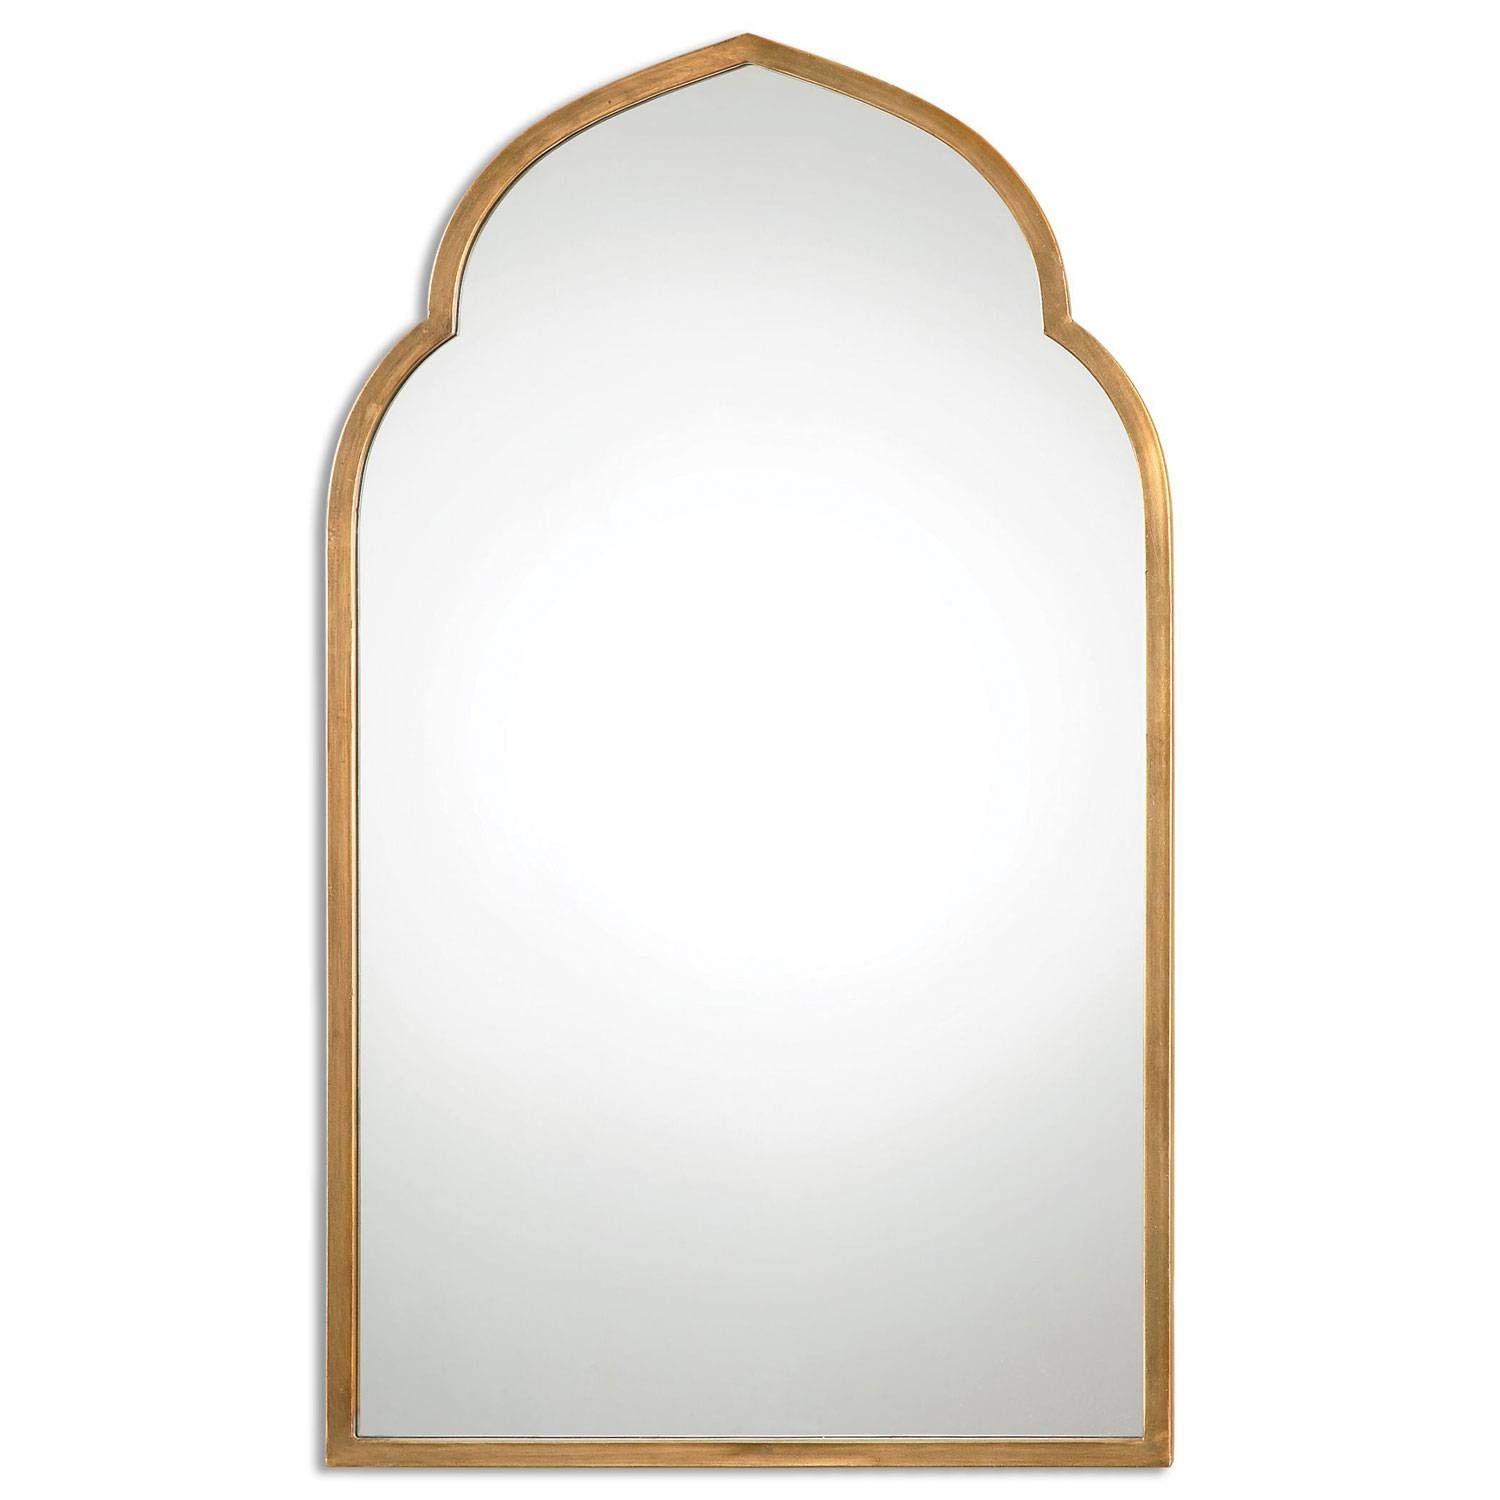 Kenitra Gold Arch Mirror Uttermost Wall Mirror Mirrors Home Decor Inside Gold Arch Mirrors (Photo 1 of 25)